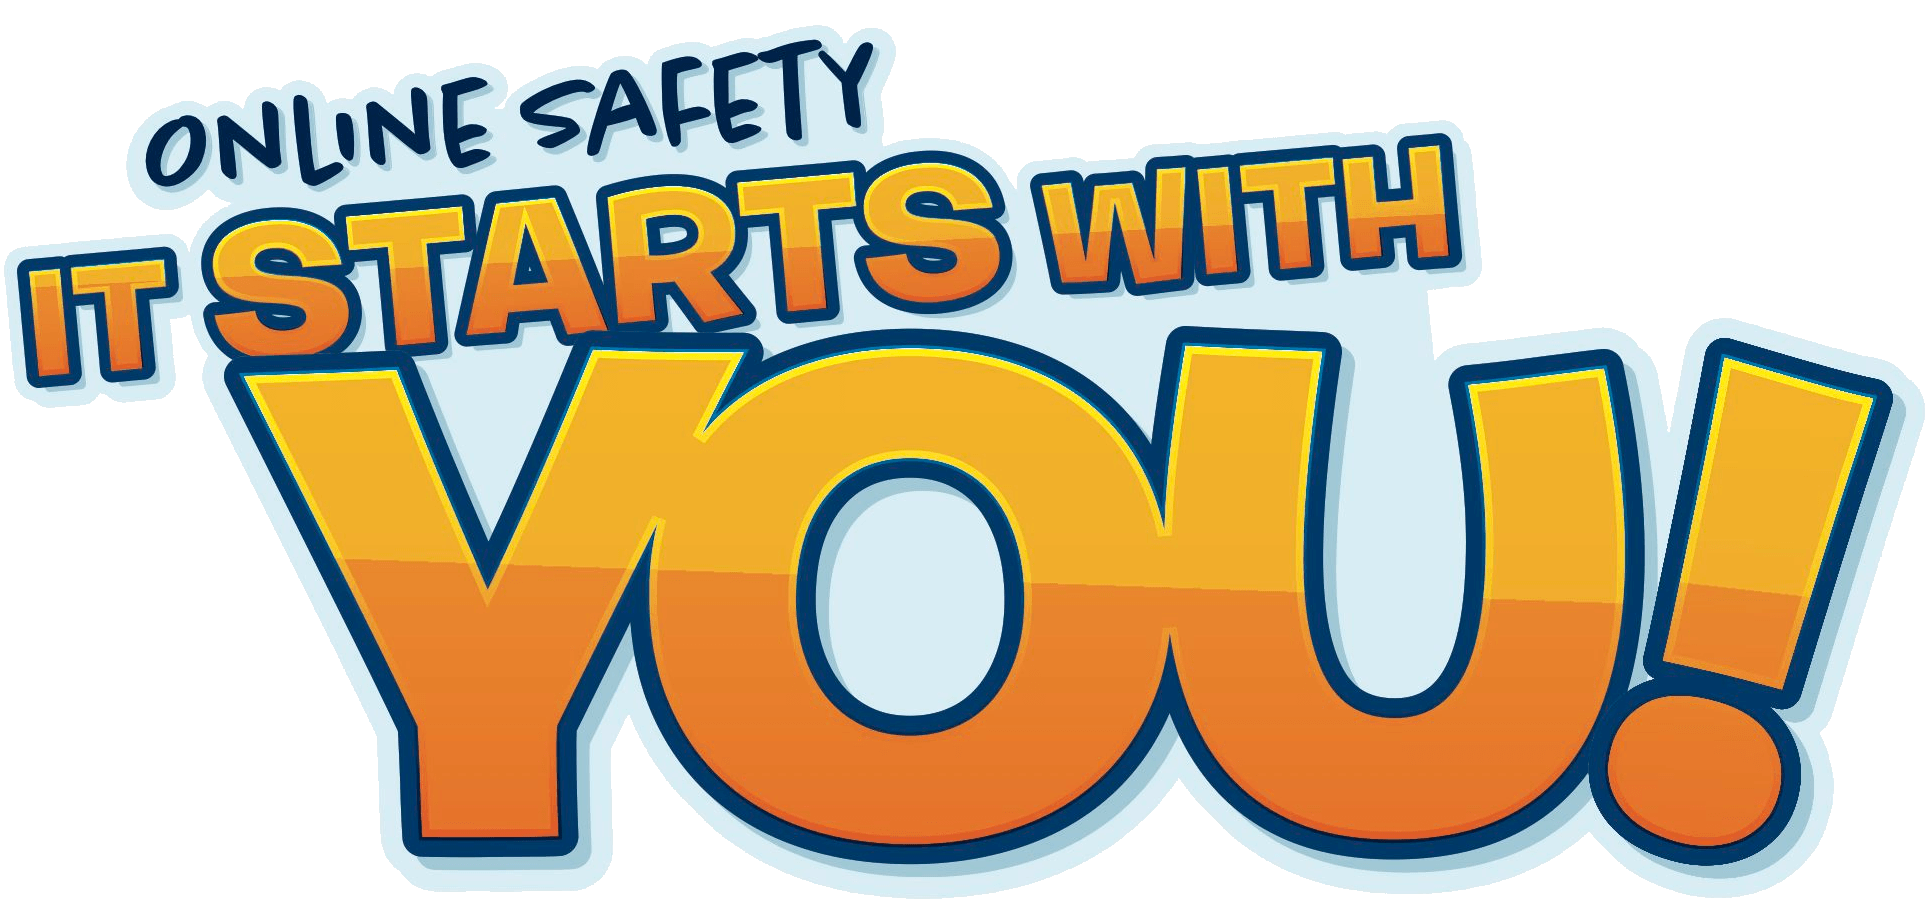 Internet Safety Logo - Safety Quiz